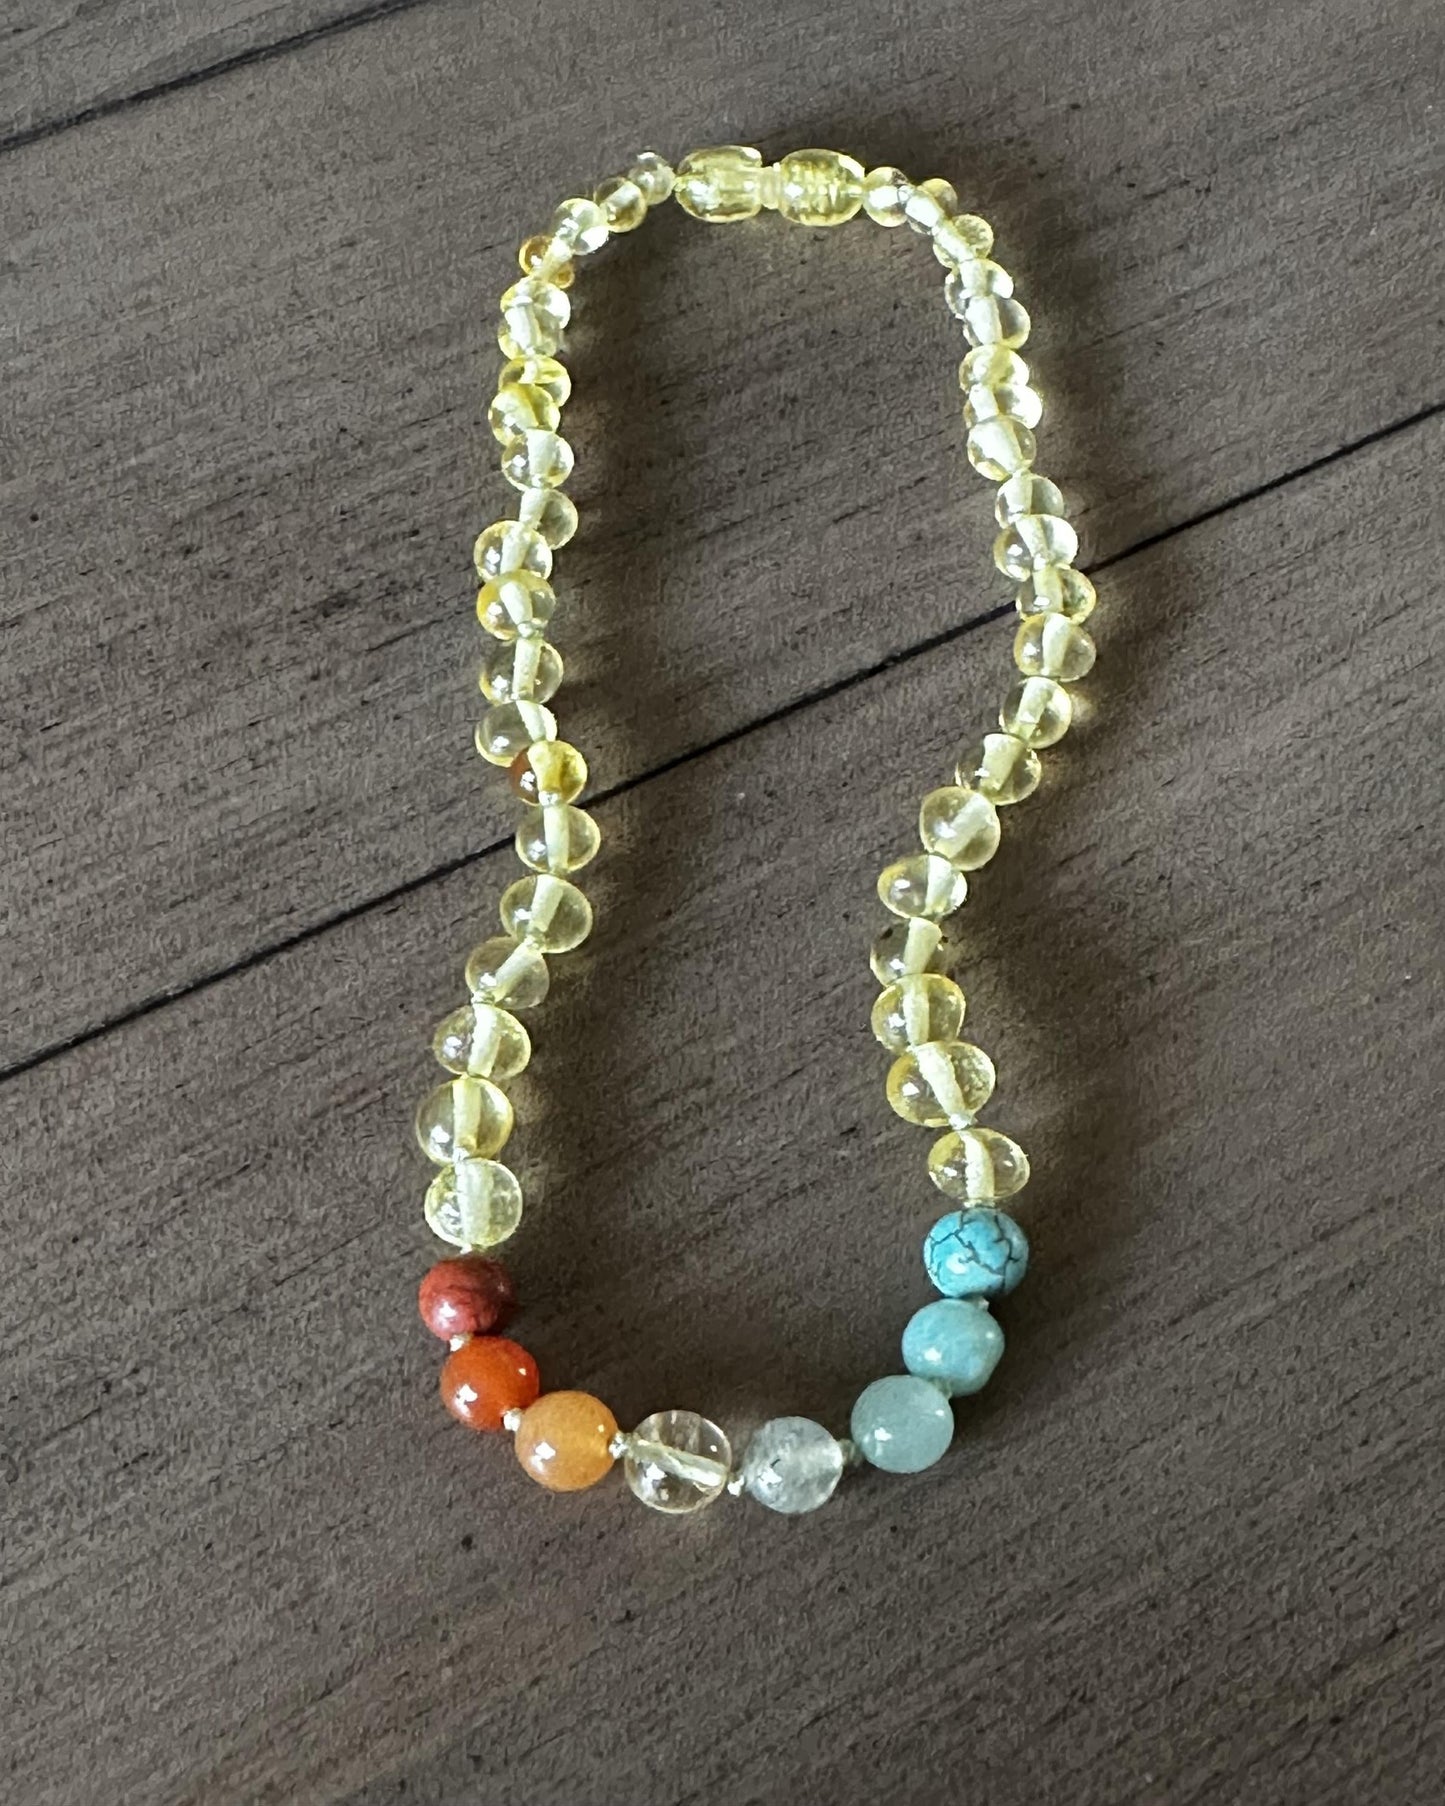 Retro Rainbow Teething necklace